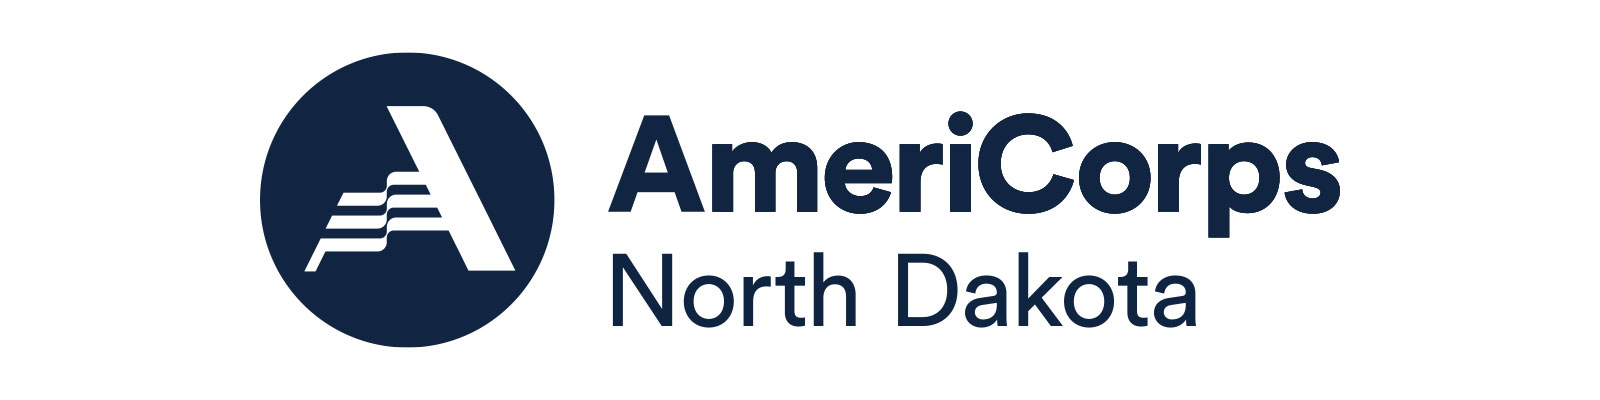 AmeriCorps North Dakota logo